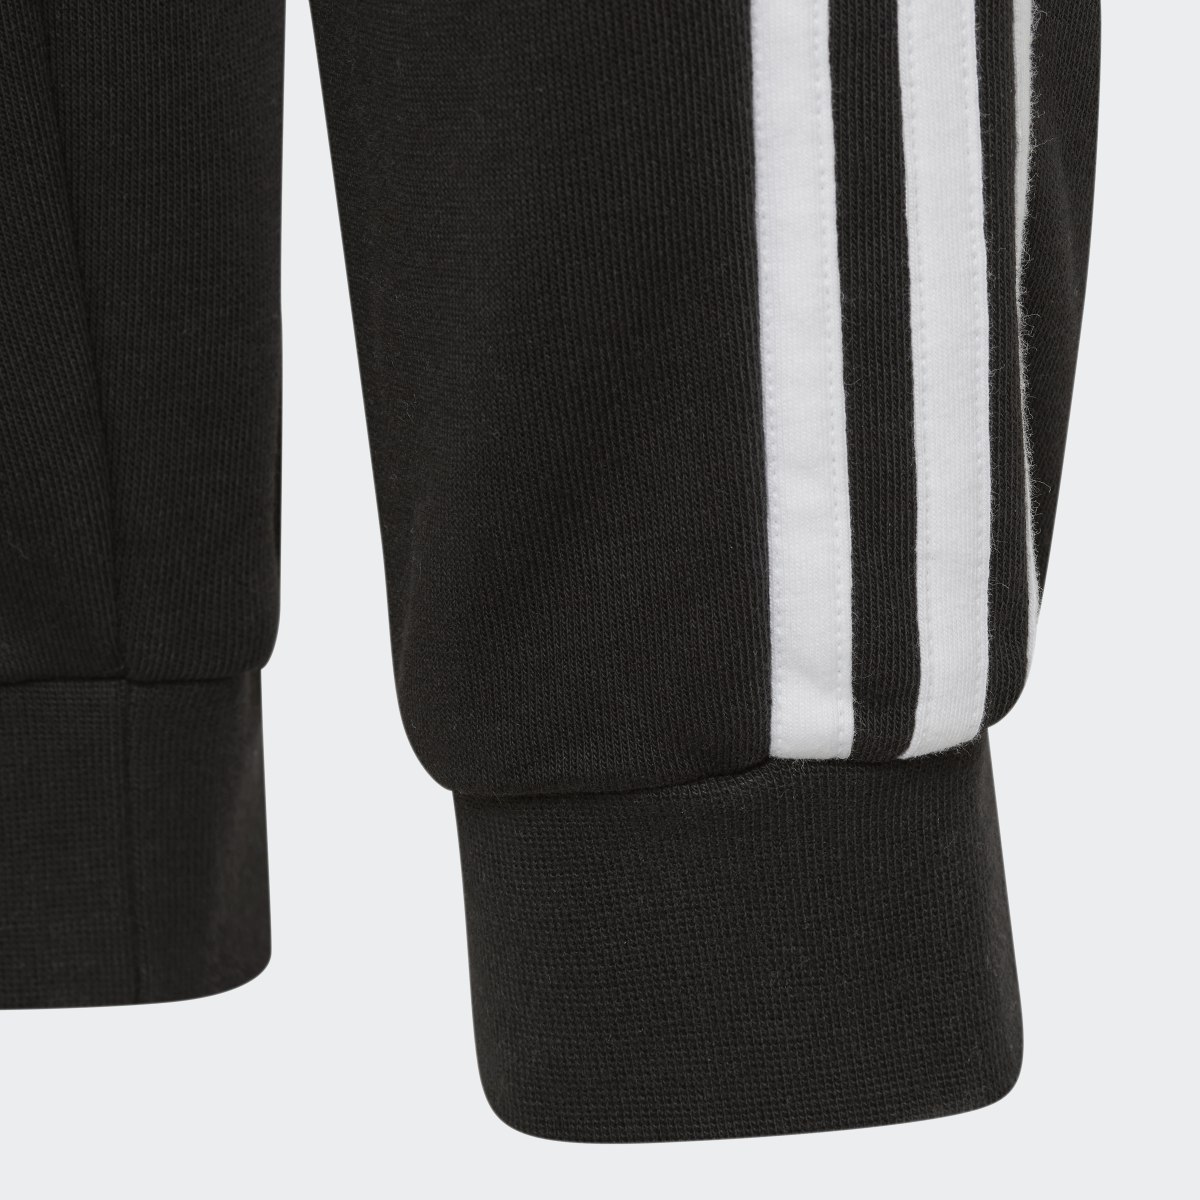 Adidas Germany Pants. 4